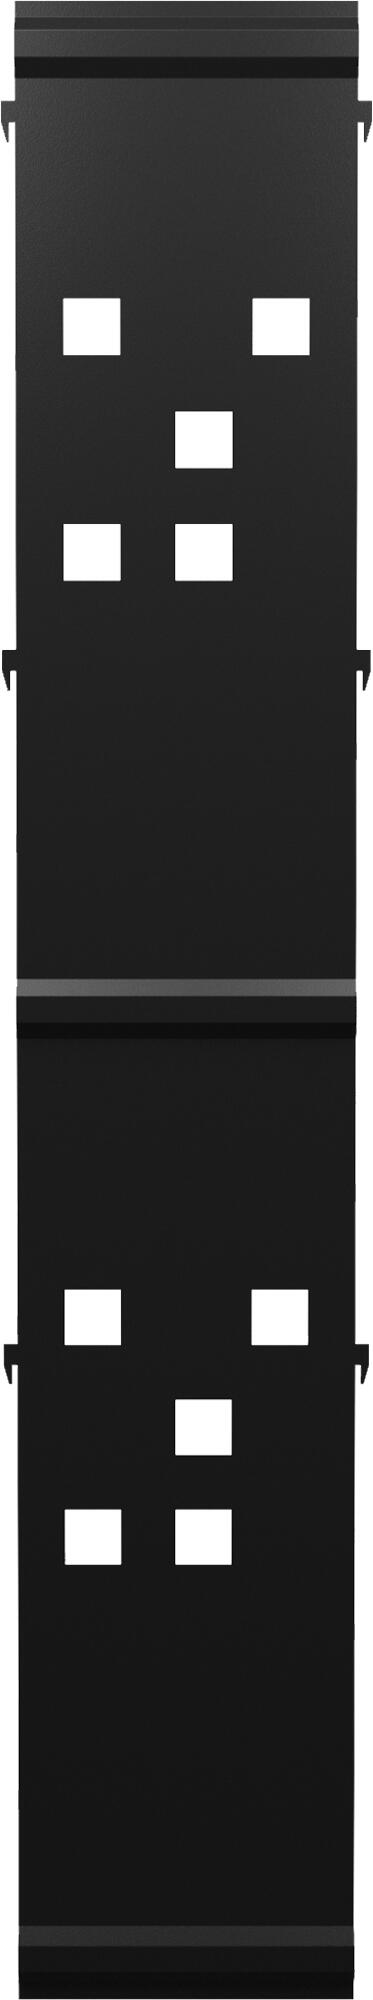 Panel remate valla acero galvanizado franja cuadros negro 144x24,5 cm